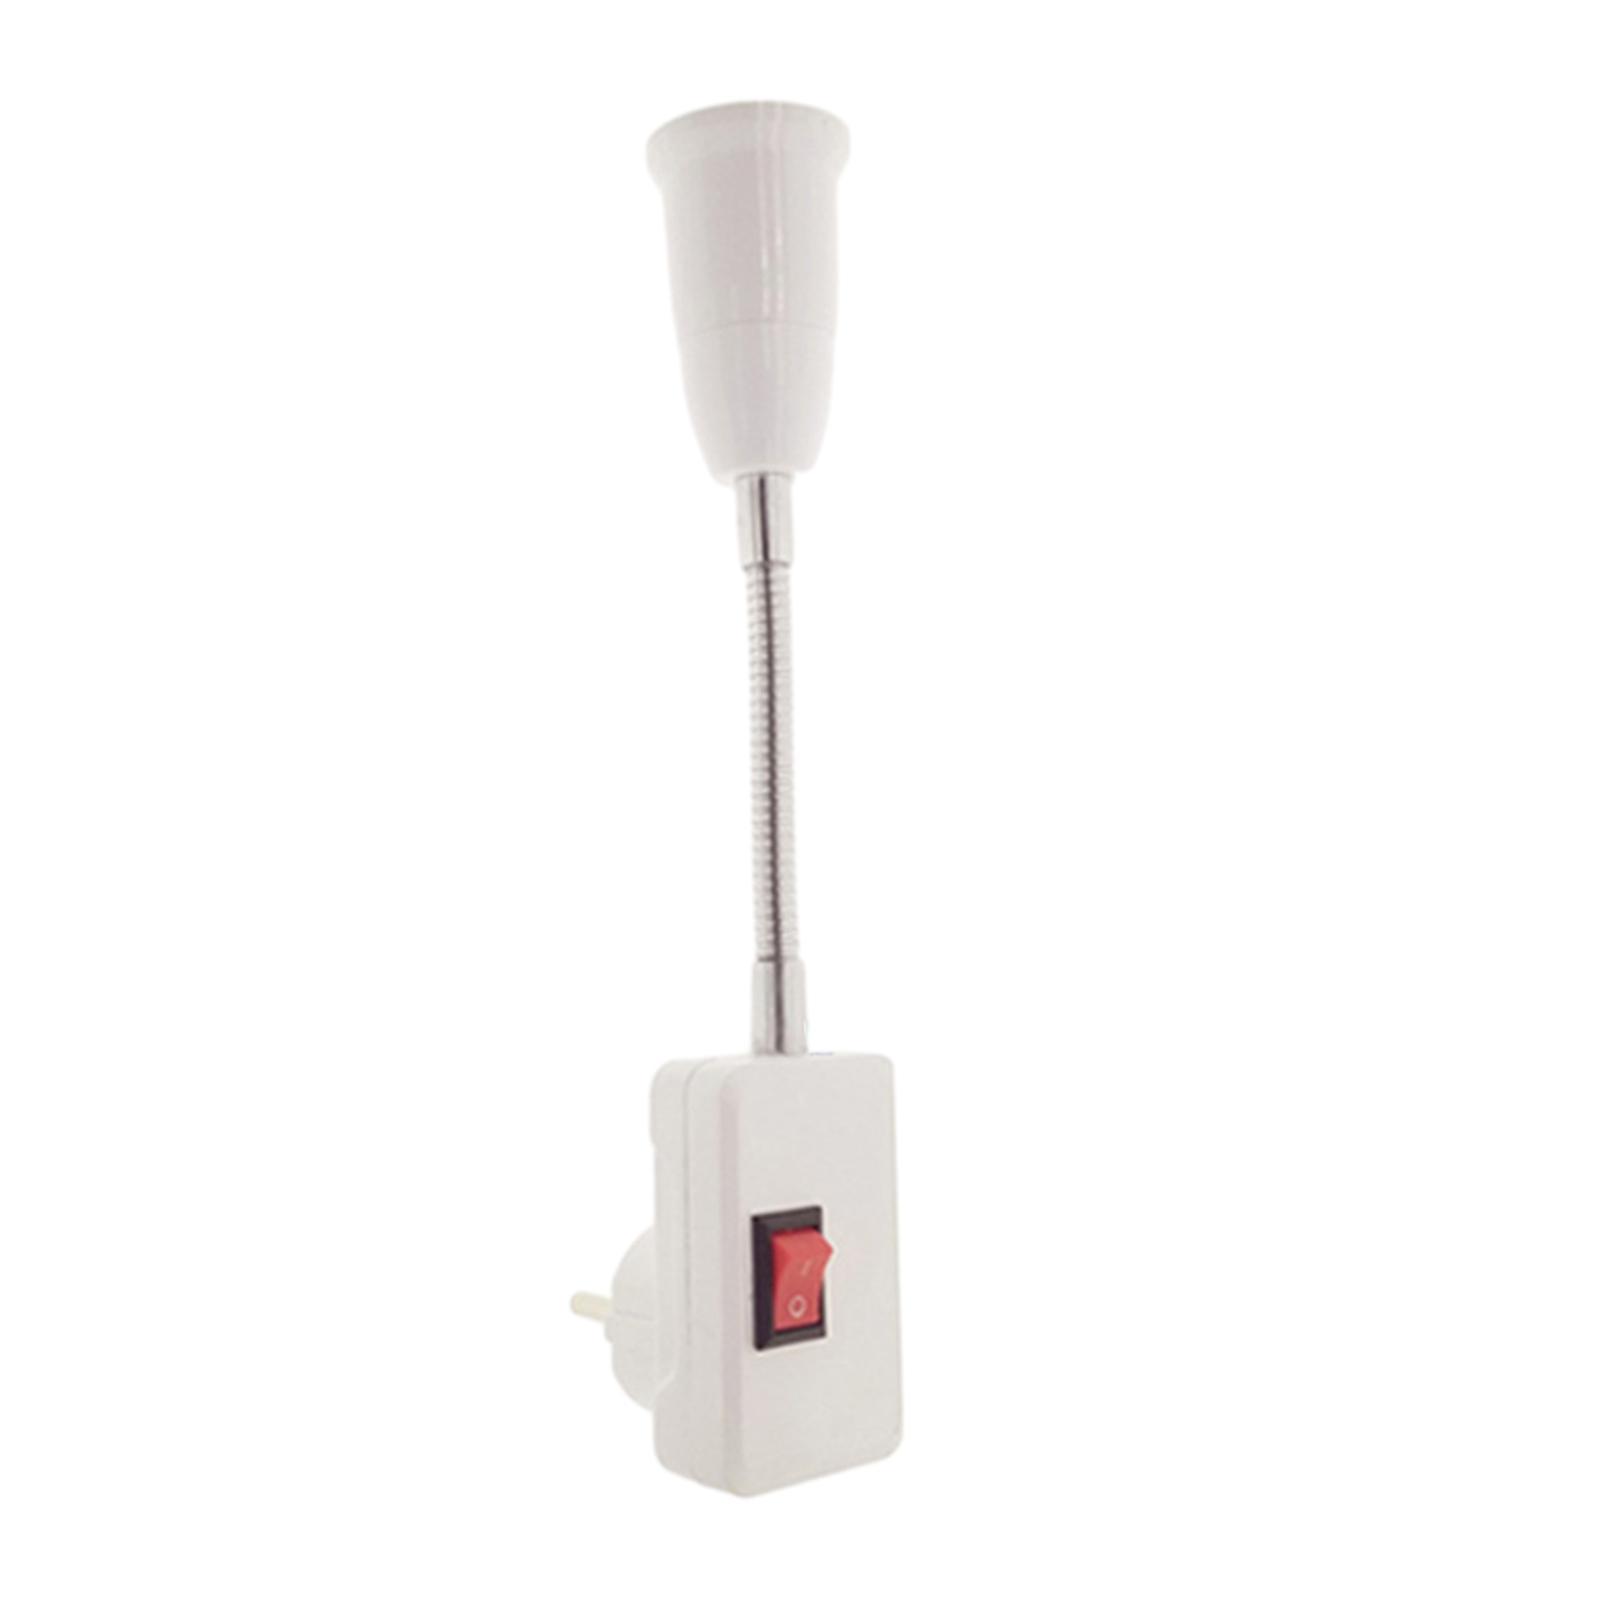 LED Light Lamps Switch Flexible Bulb Adapter Converter E27 Lamp with Socket